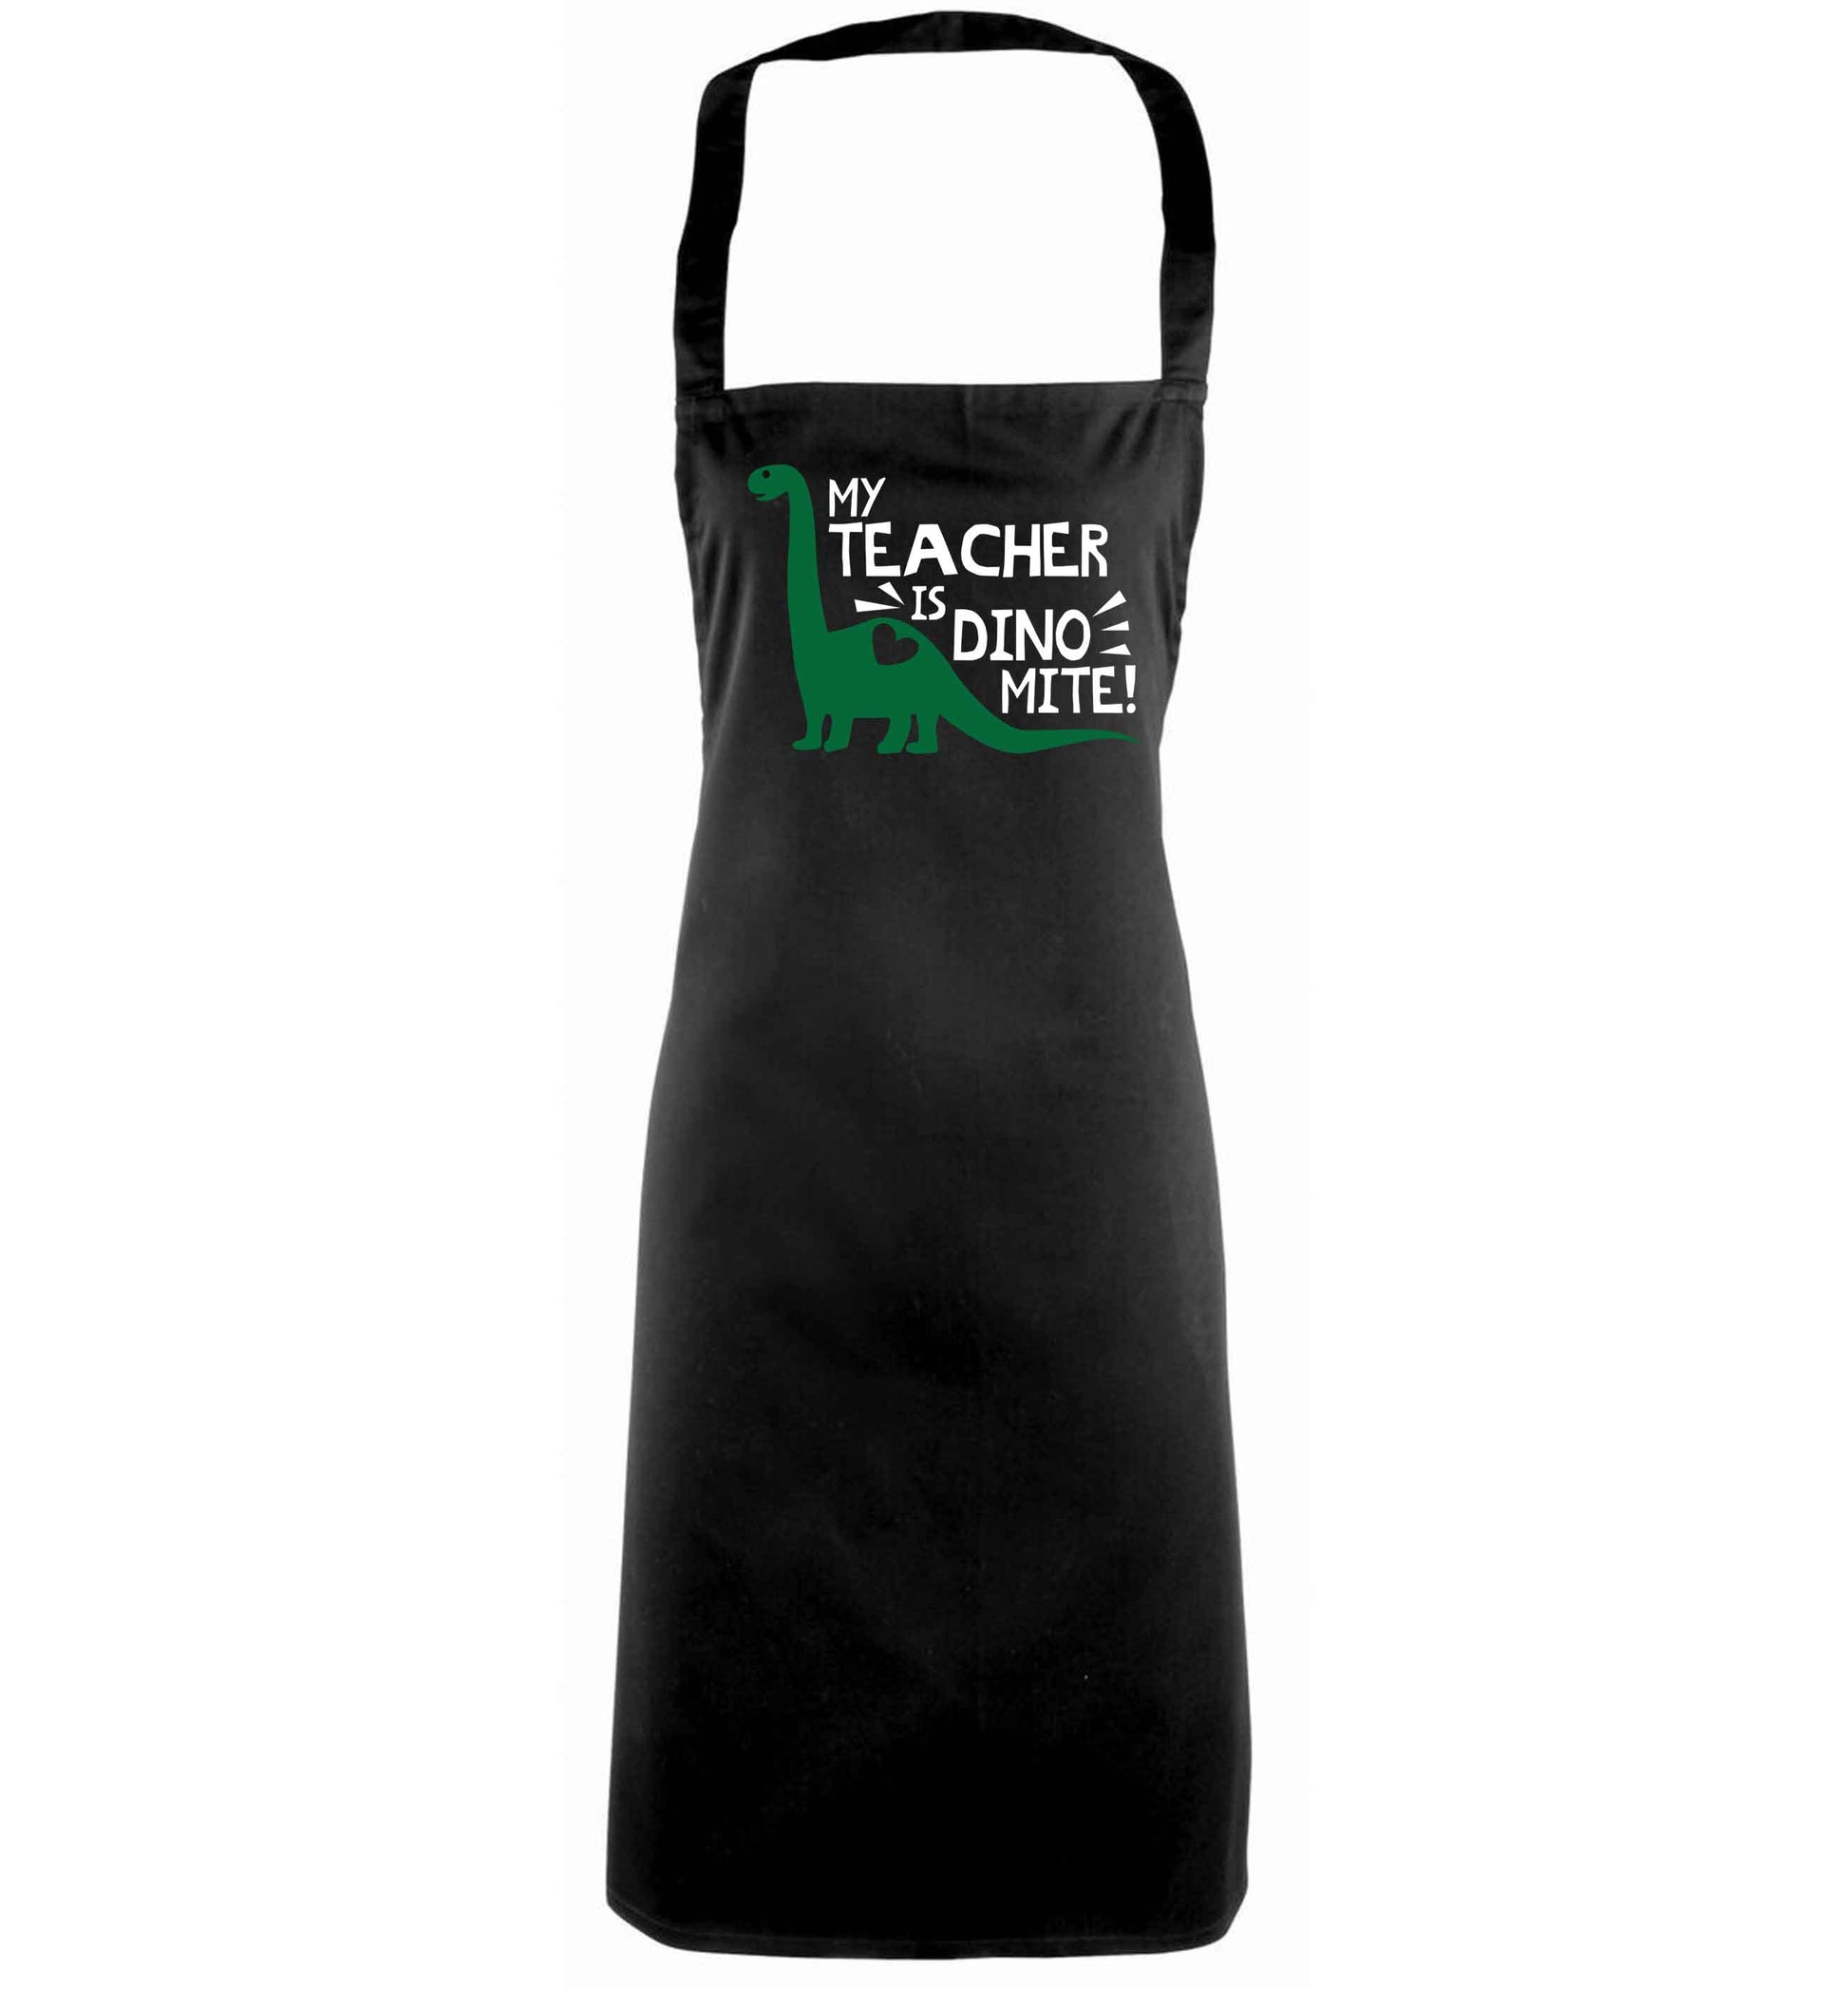 My teacher is dinomite! black apron